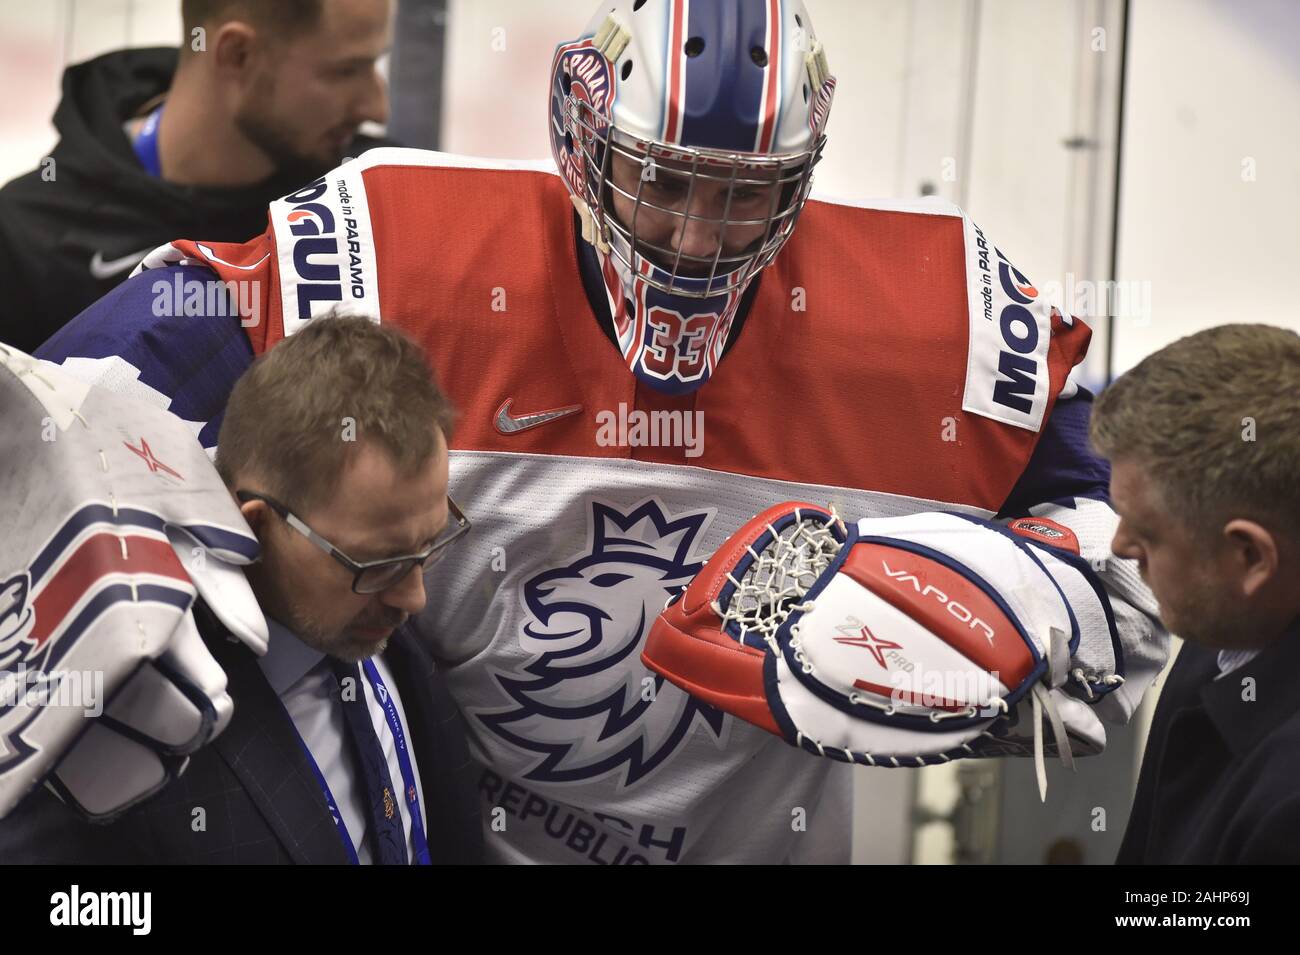 2019 iihf world junior ice hockey championship hi-res stock photography and images